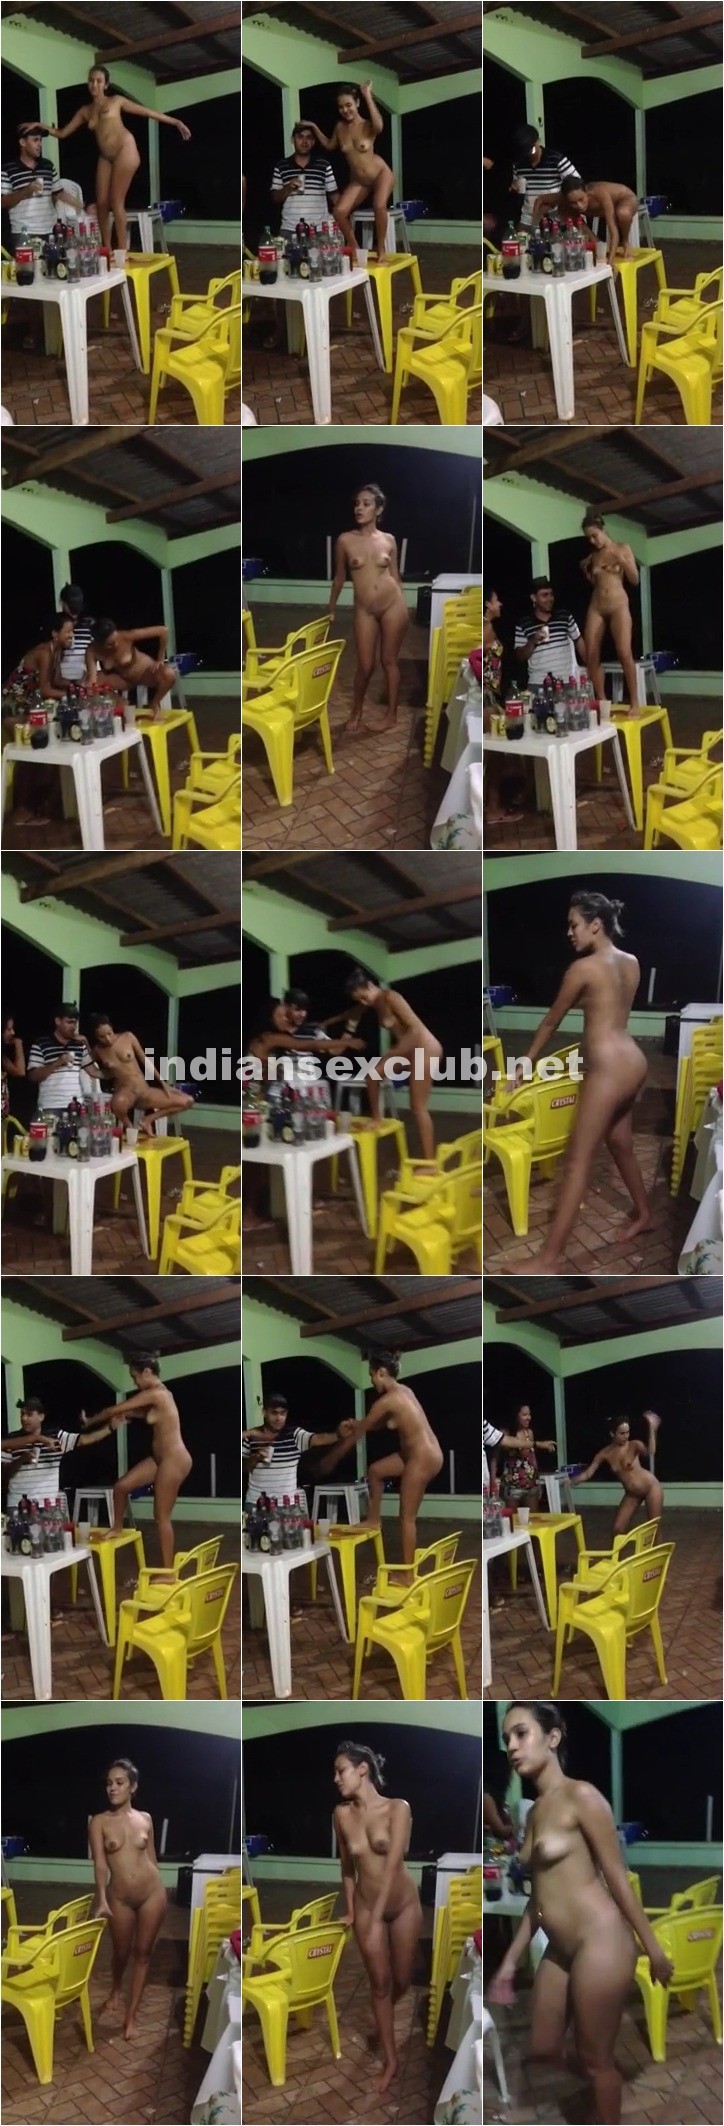 Sexy Punjabi Village Open Bar naked girl dancing with customer Video